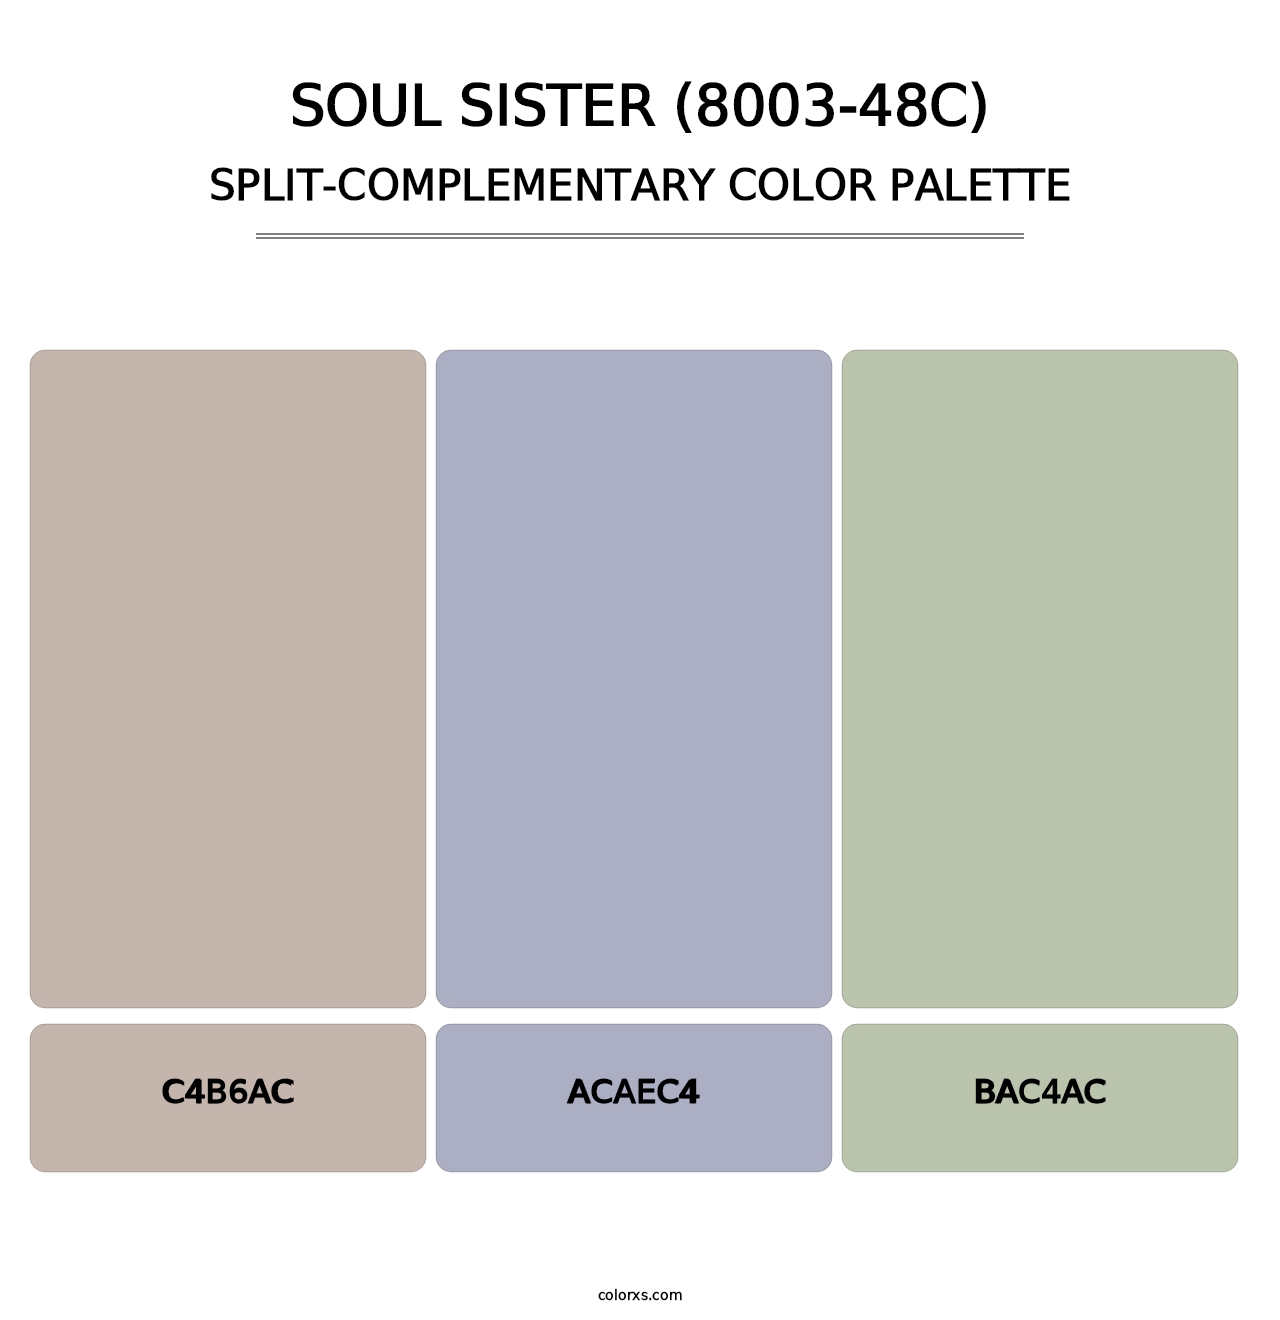 Soul Sister (8003-48C) - Split-Complementary Color Palette